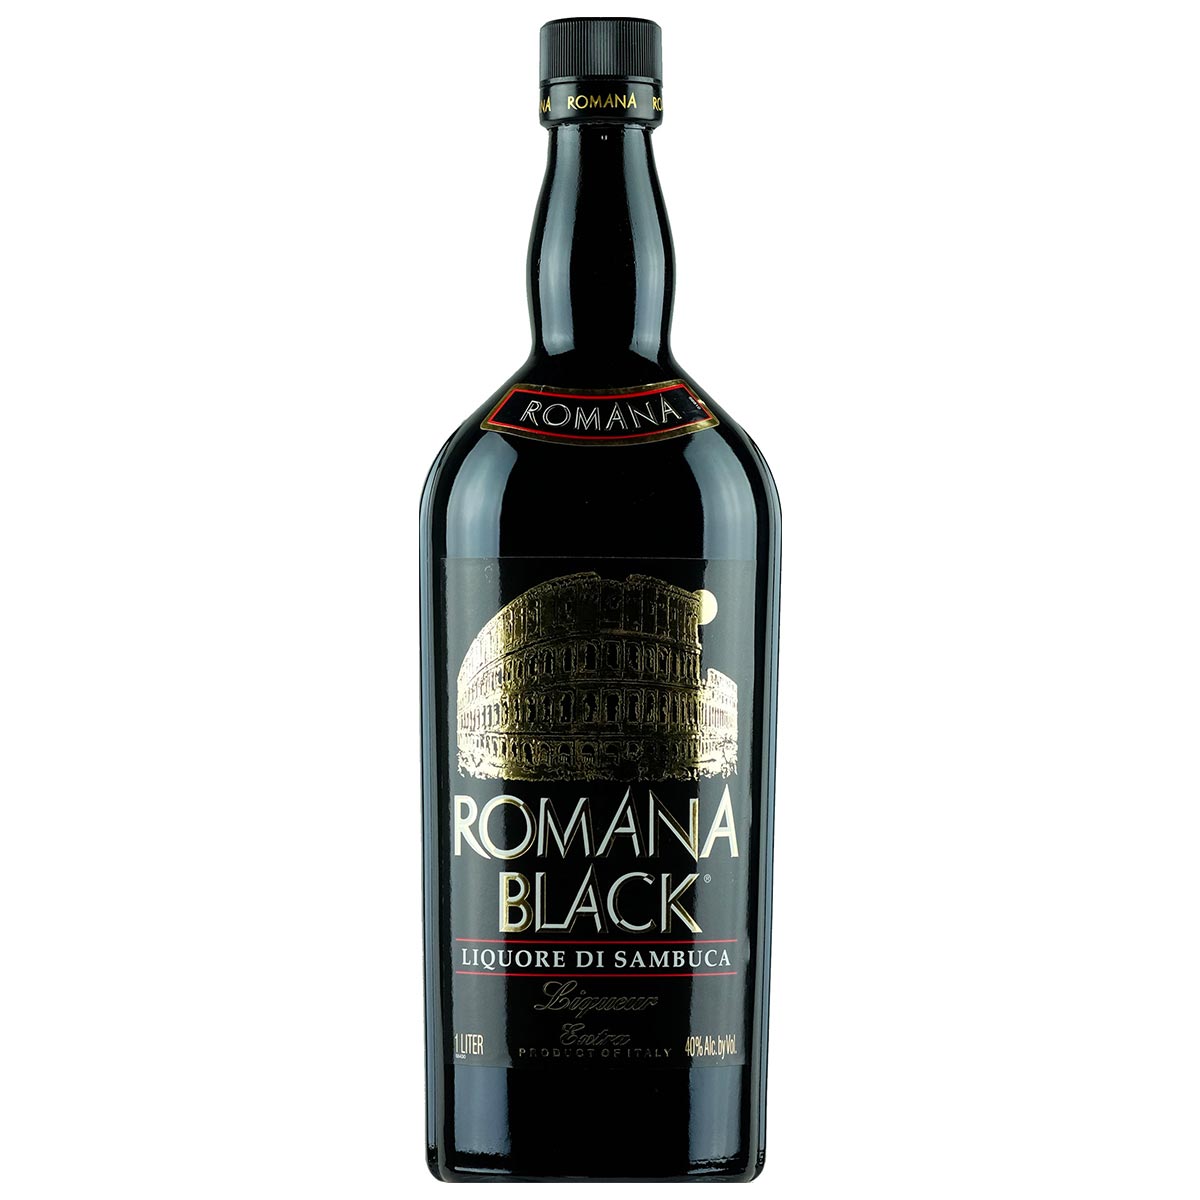 Romana Black